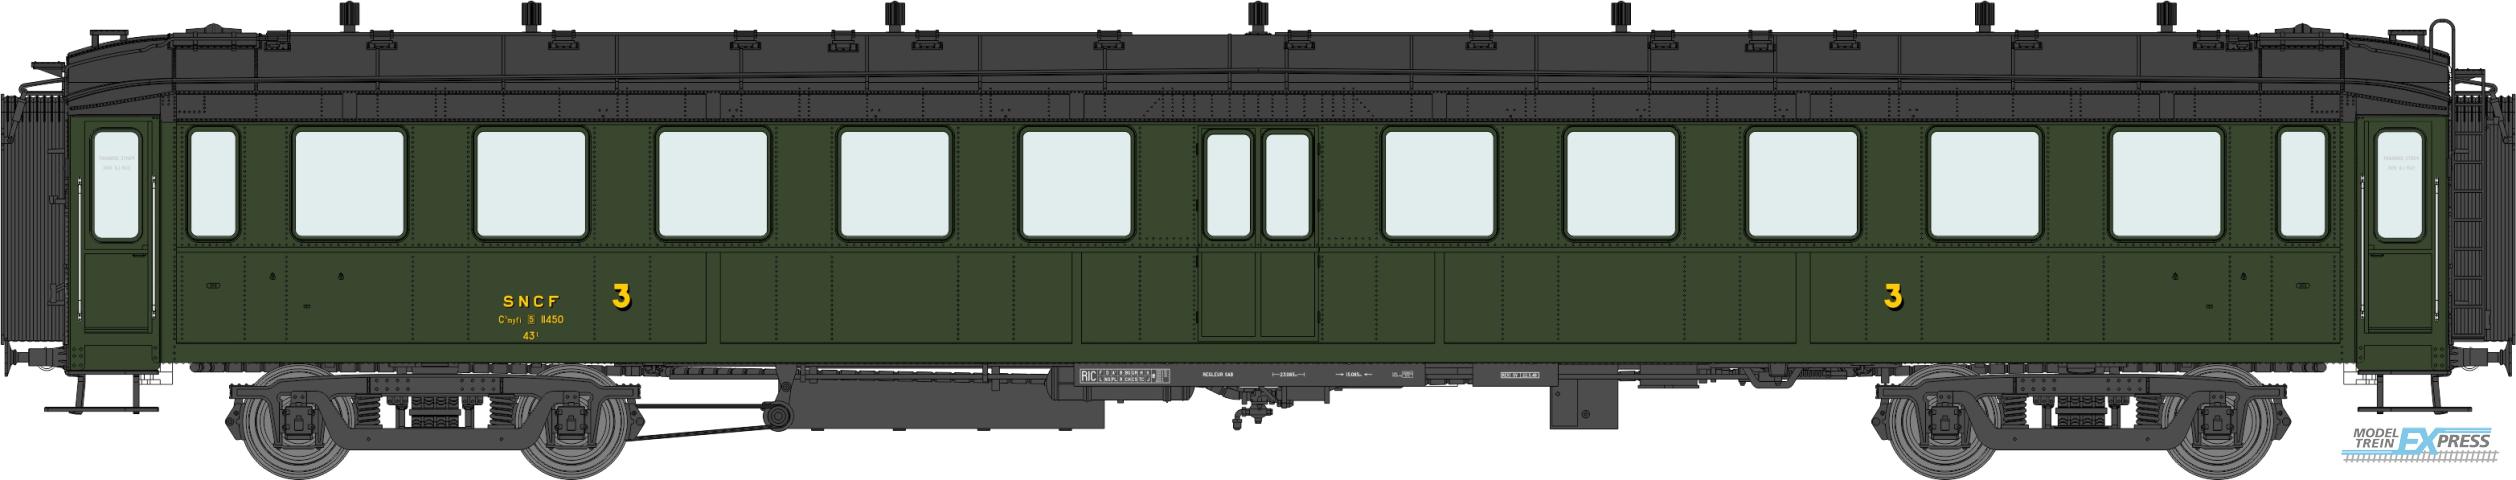 REE models VB-368 BACALAN Coach 3rd class C11myfi 11450 SNCF Ep.IIIA black roof, ladders